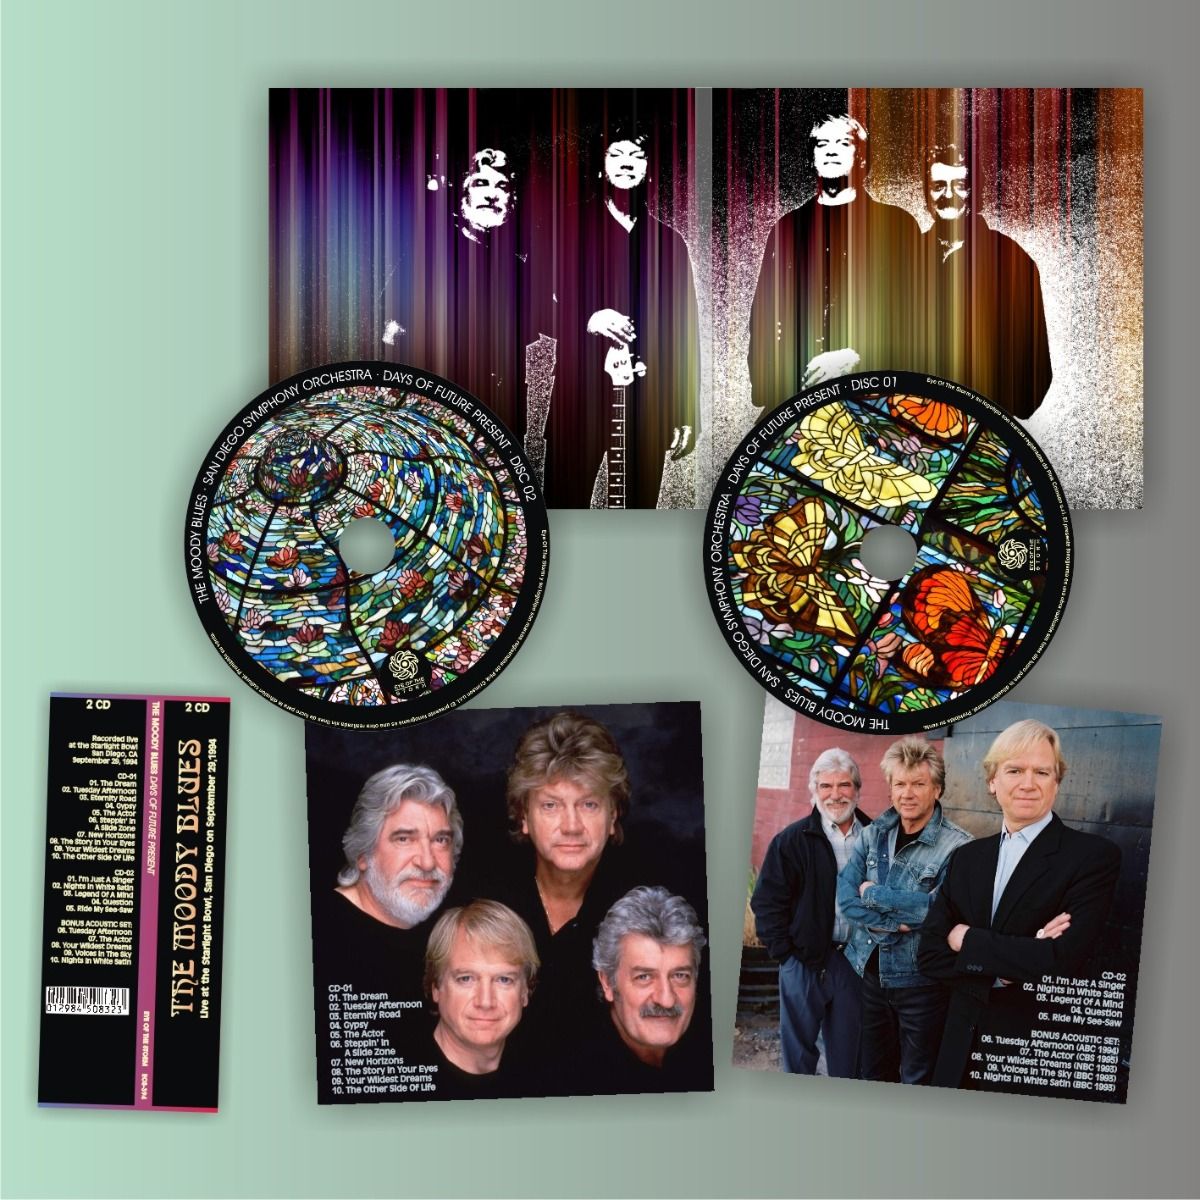 THE MOODY BLUES (w. San Diego Symphony O.) - Days Of Future Present: Live in San Diego, CA 1994 + Acoustic Set (mini LP / 2x CD 